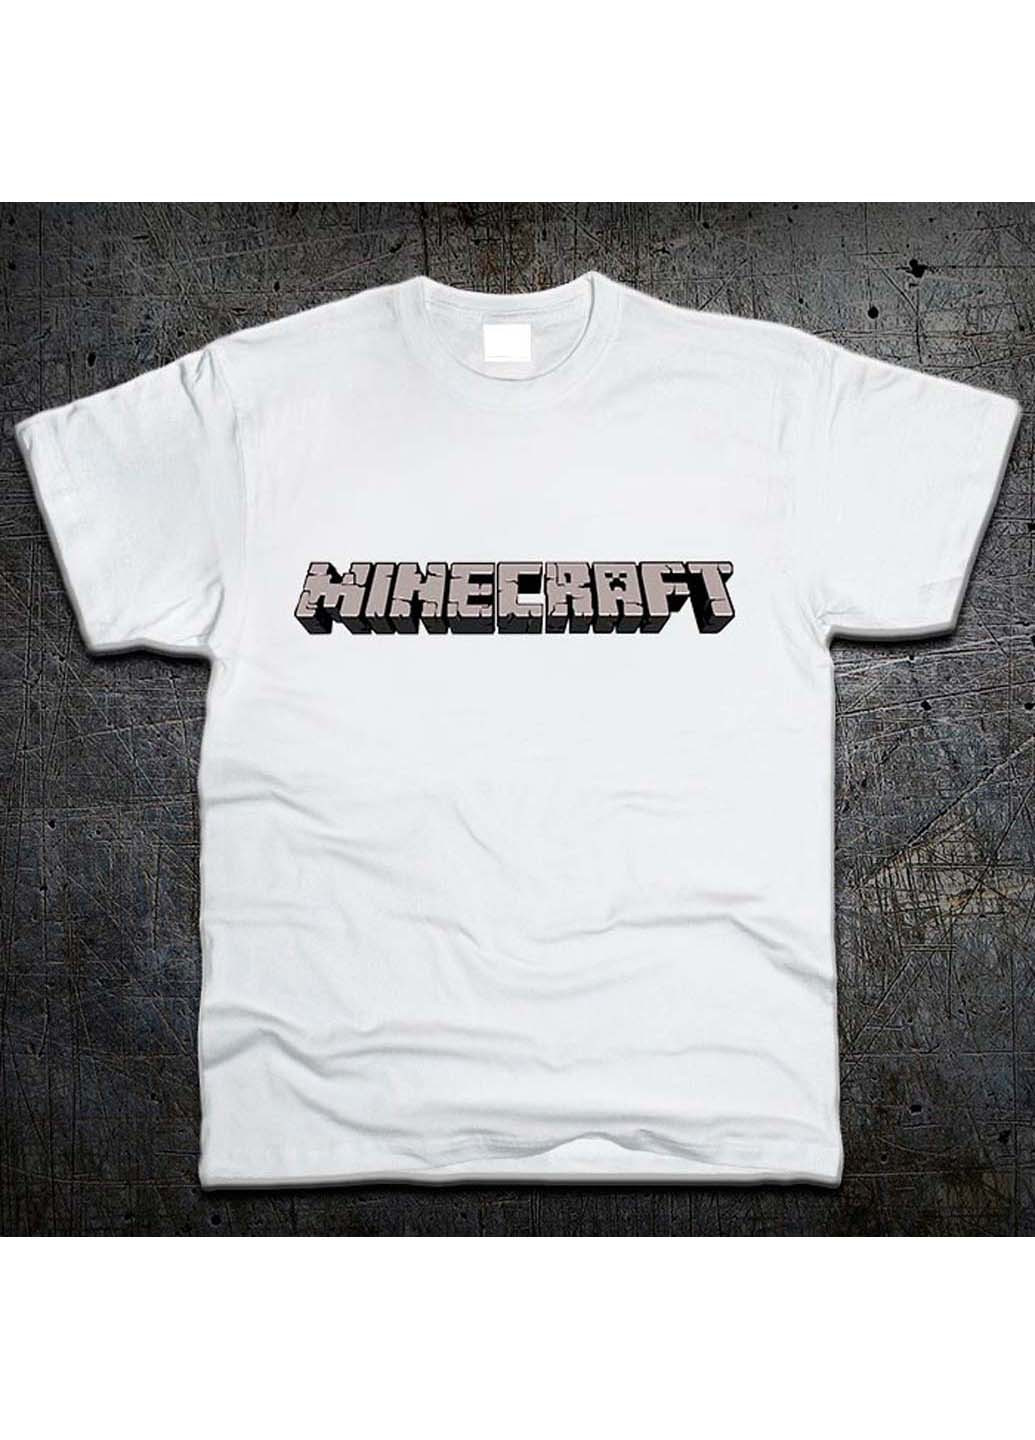 Біла футболка Fruit of the Loom Логотип Майнкрафт Logo Minecraft